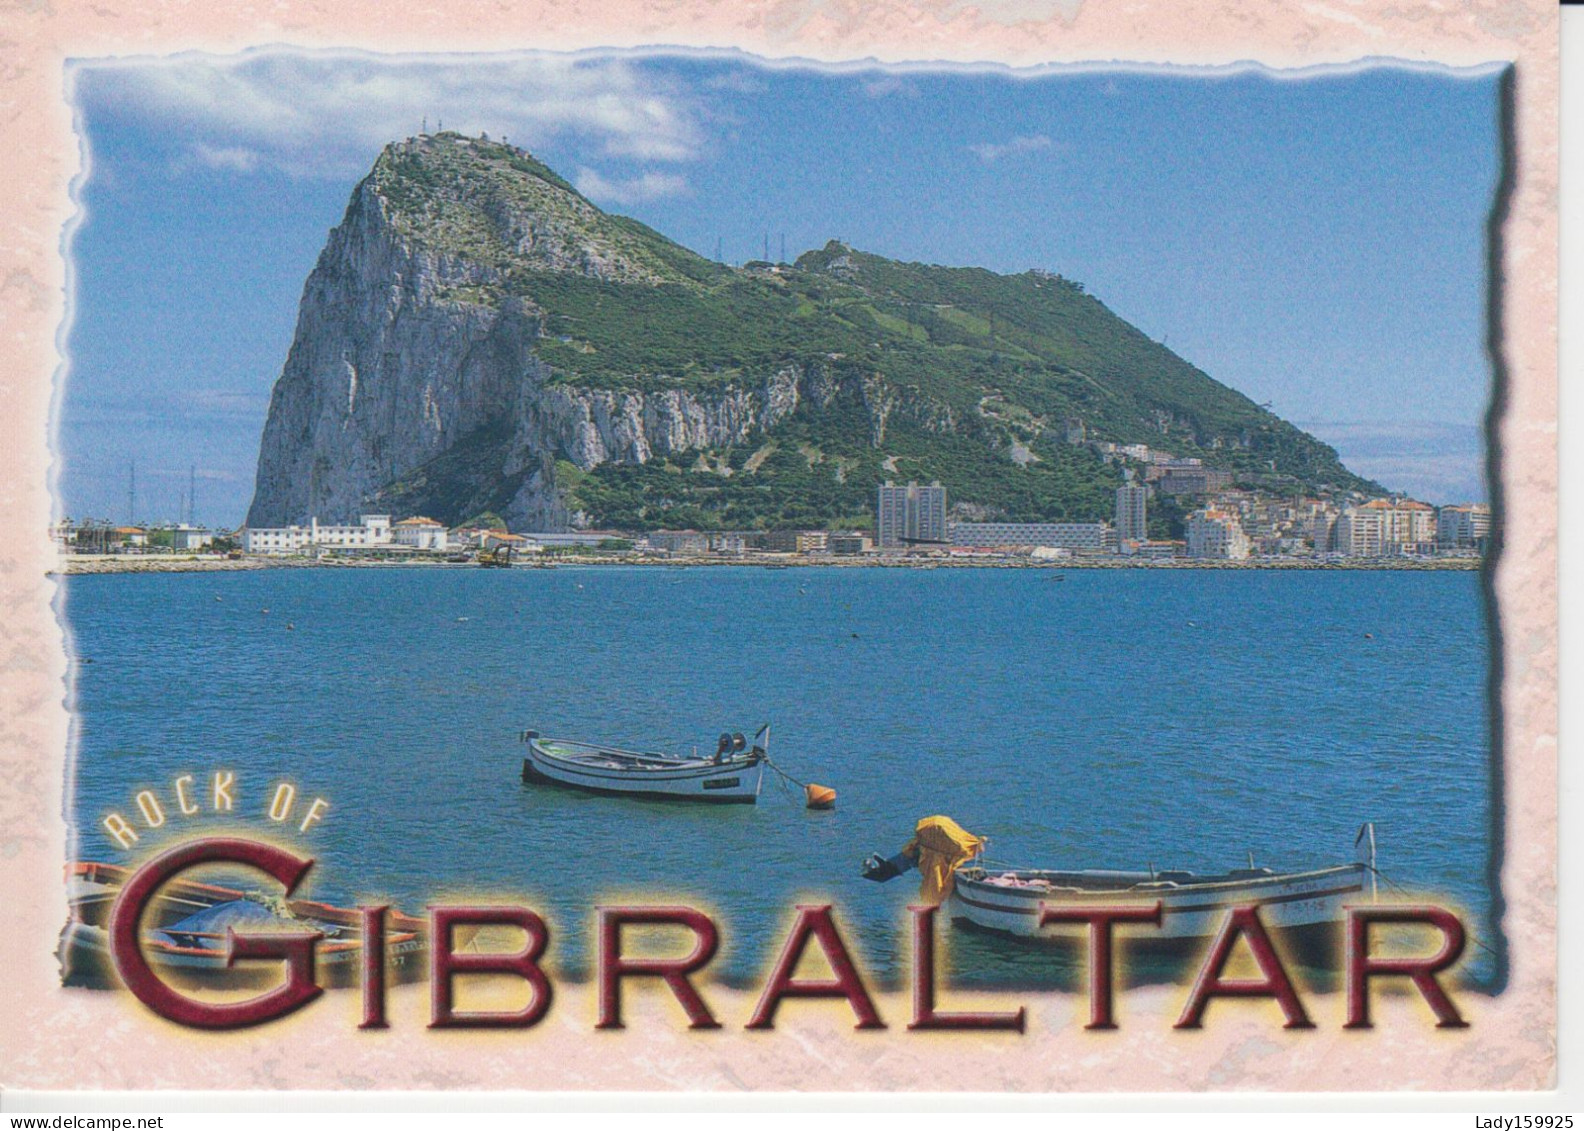 Rock Of Gibraltar  The Passage Connecting The Mediterranean Sea And The Atlantic Océan  Bateaux  Moteurs Buildings 2 Sc - Gibraltar